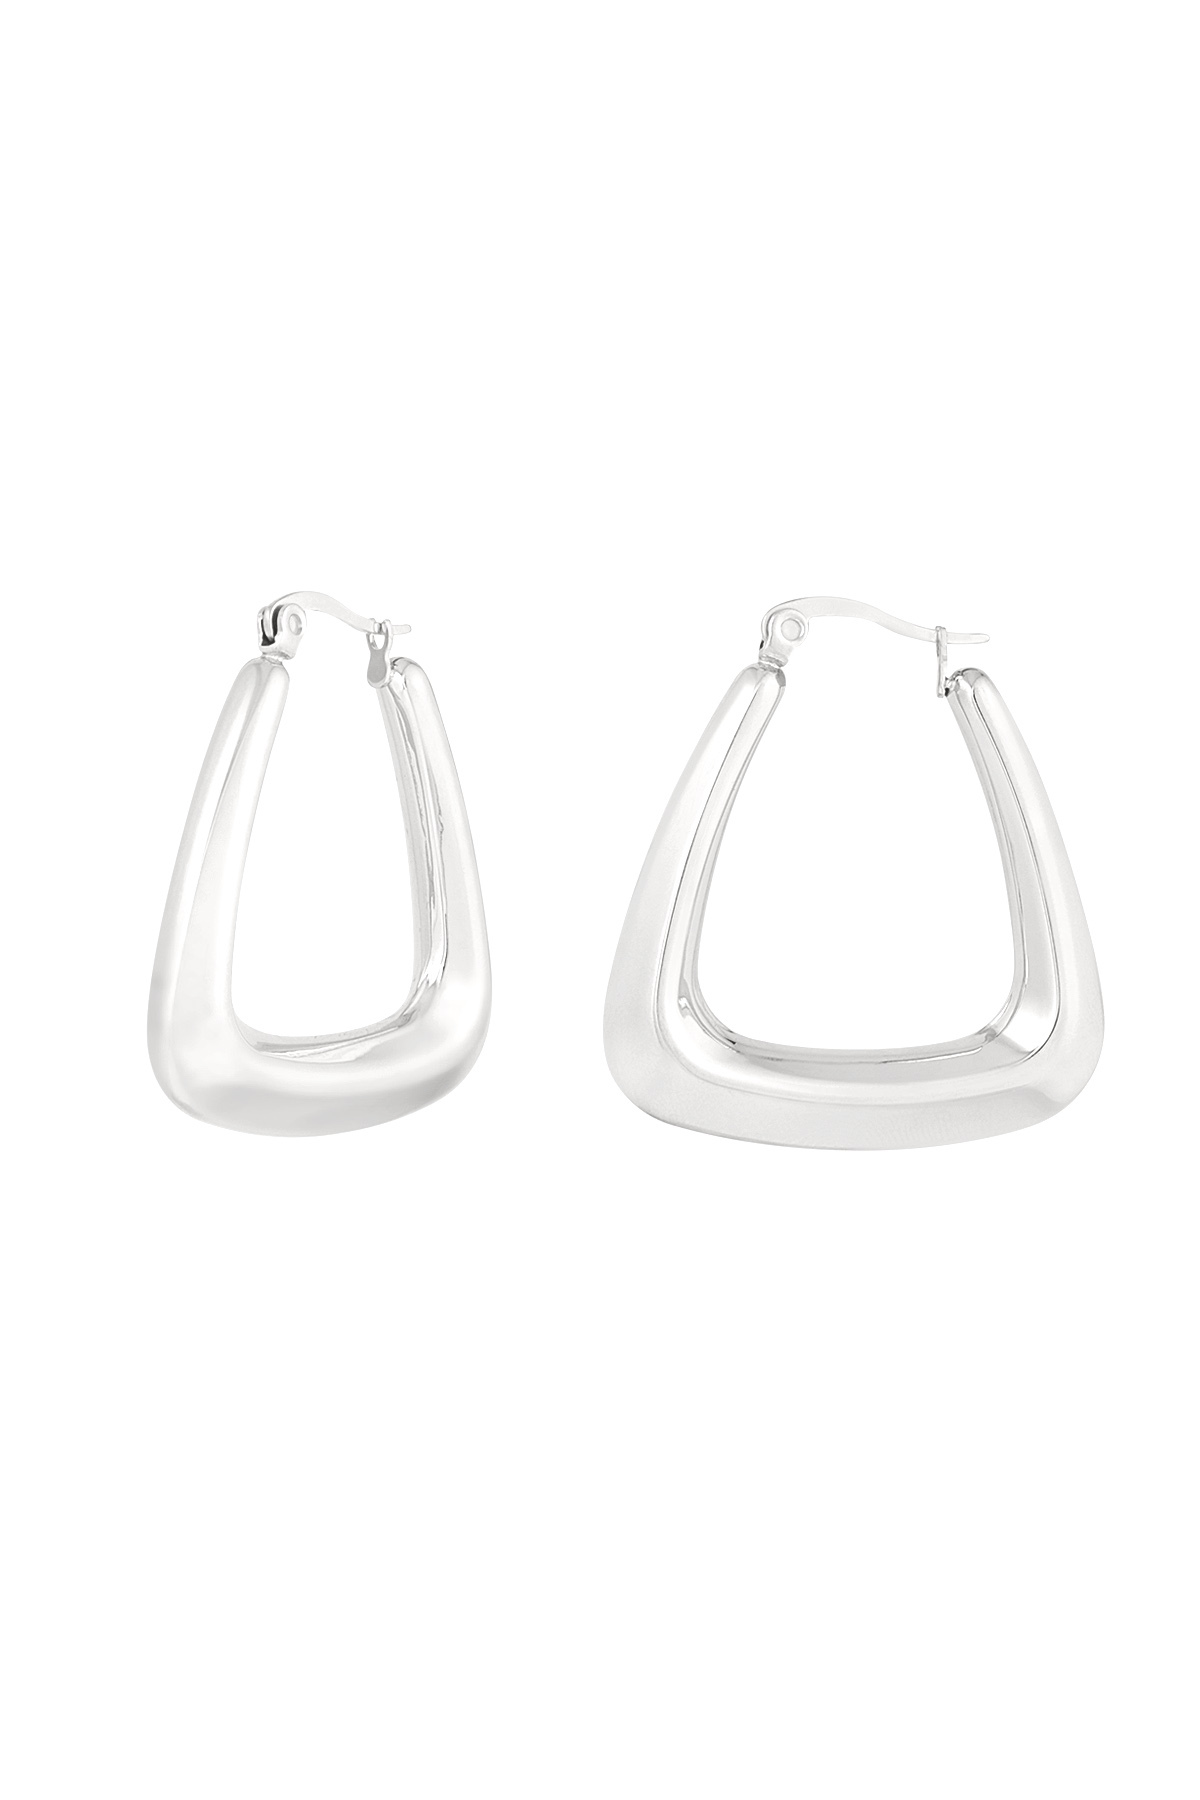 Simple statement earrings - silver h5 